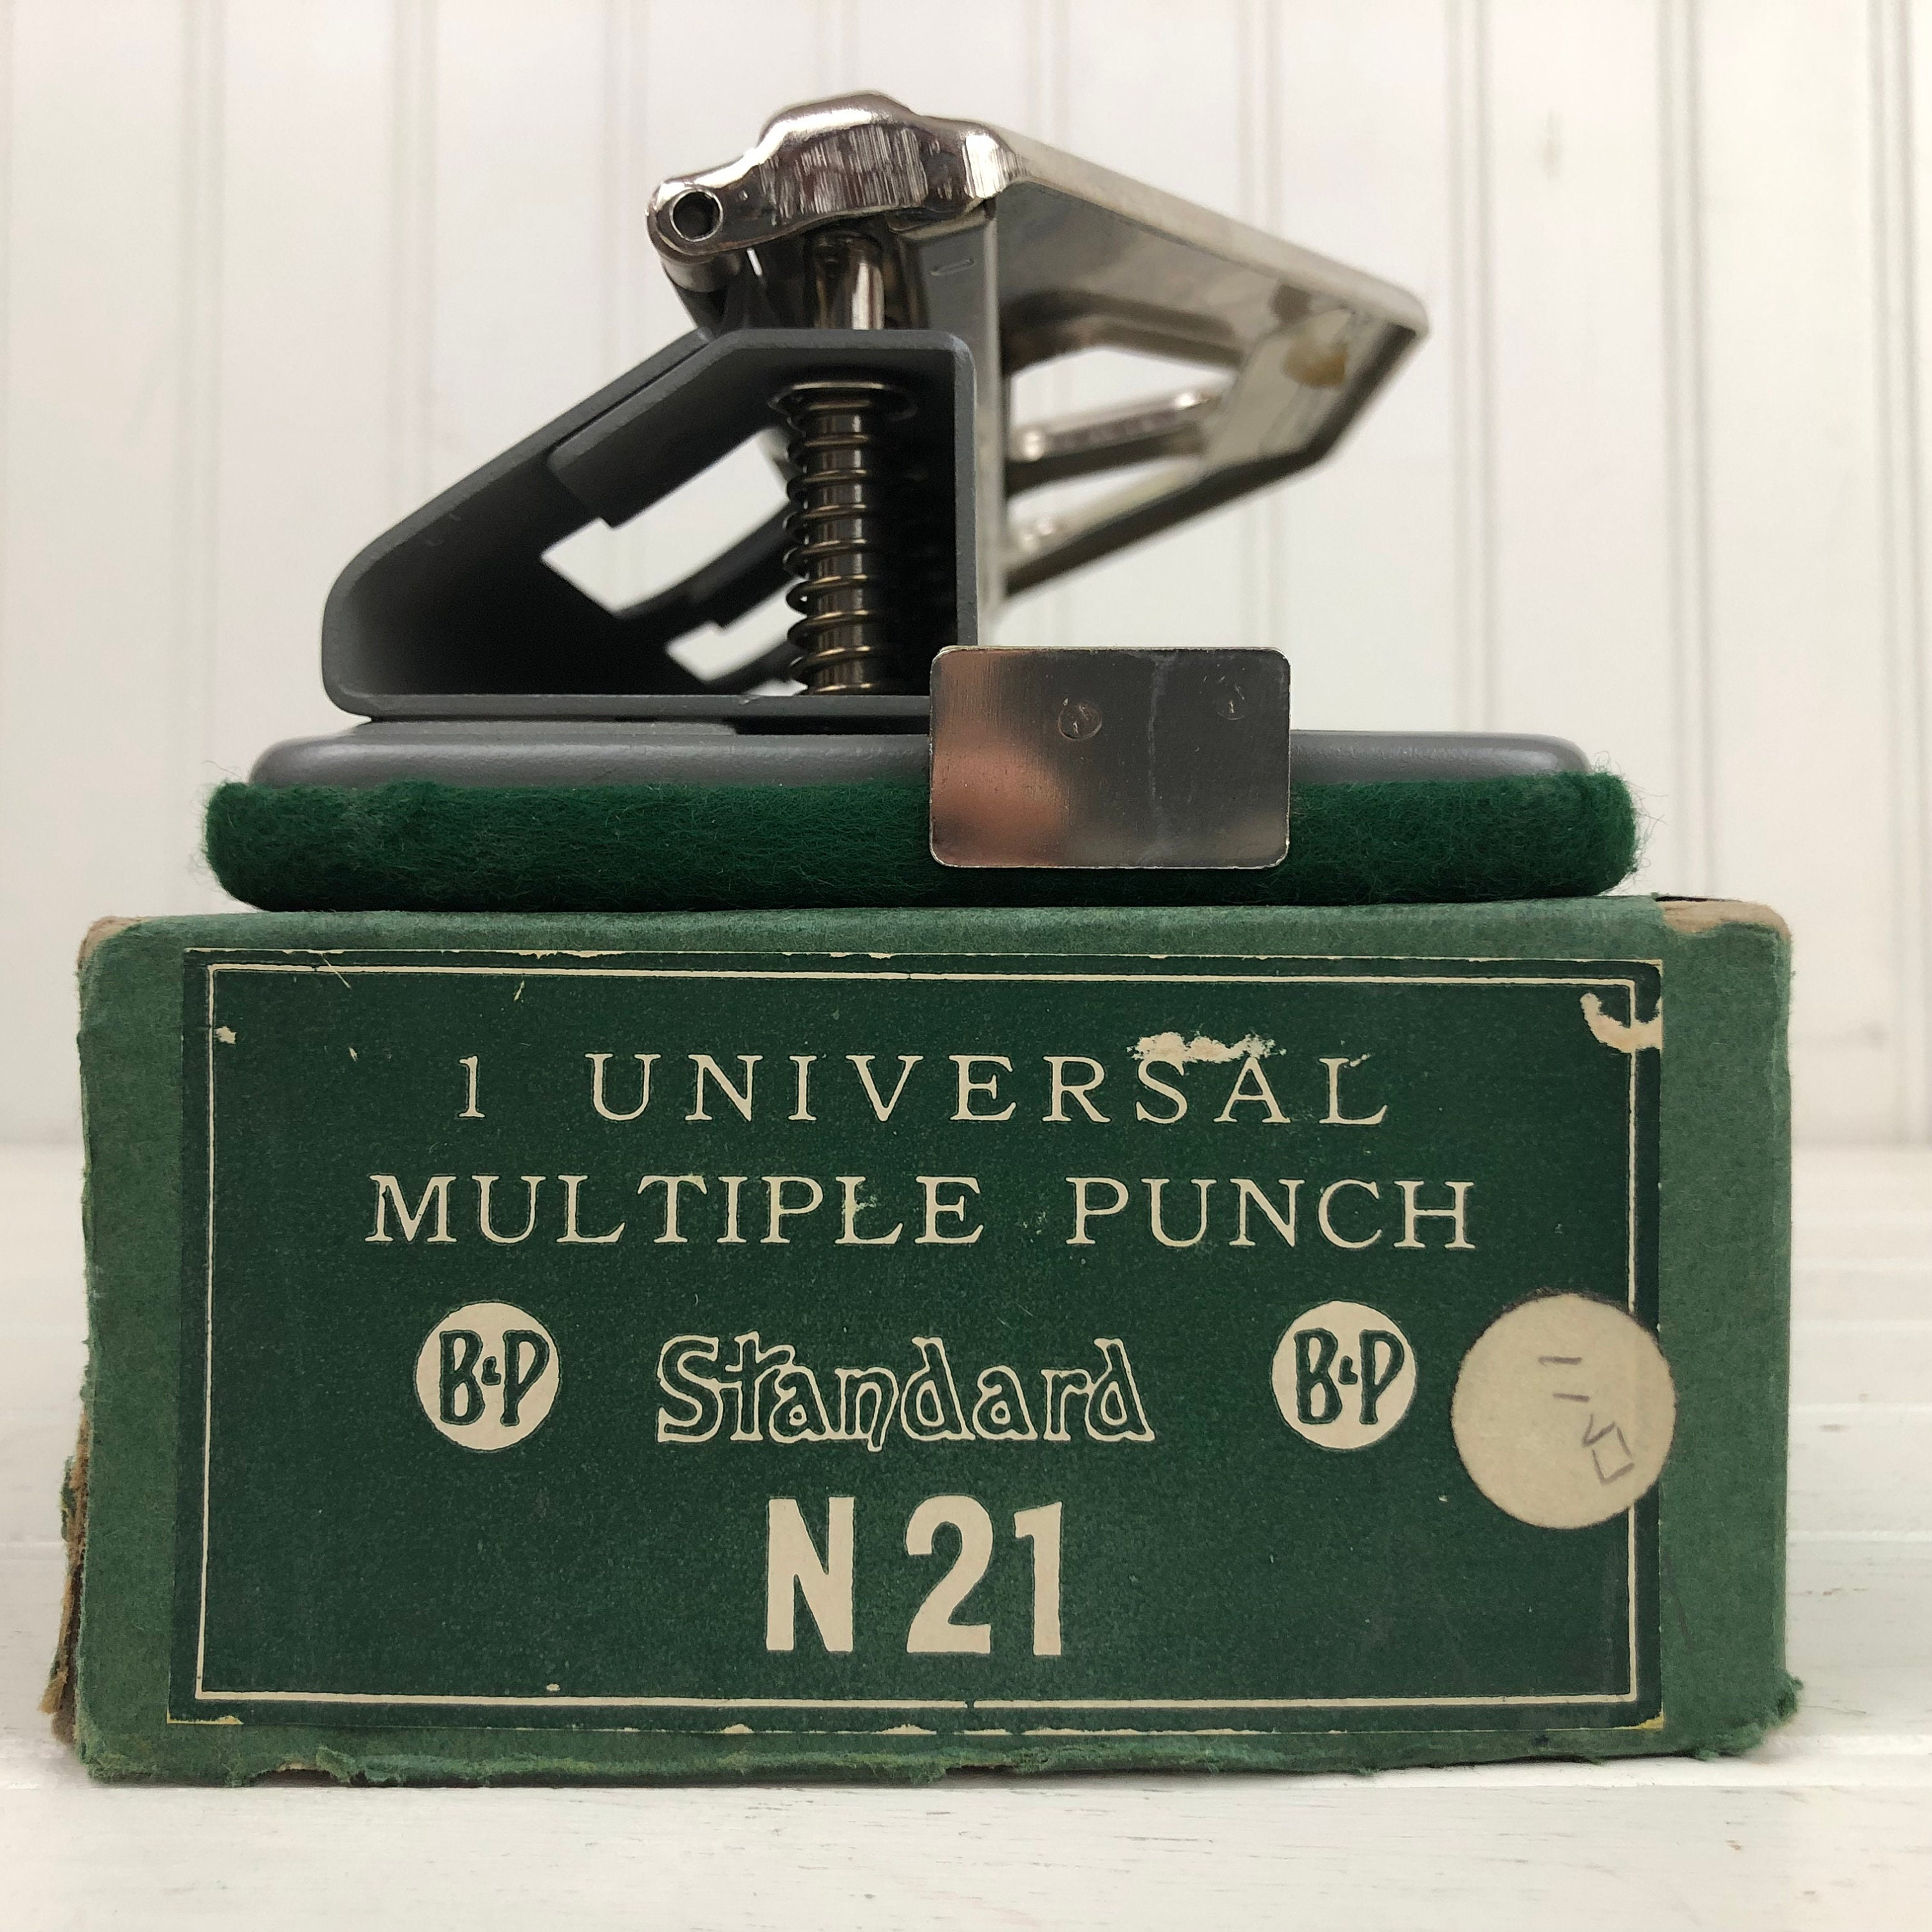 Vintage Hole Punchers one Sargent other unbranded